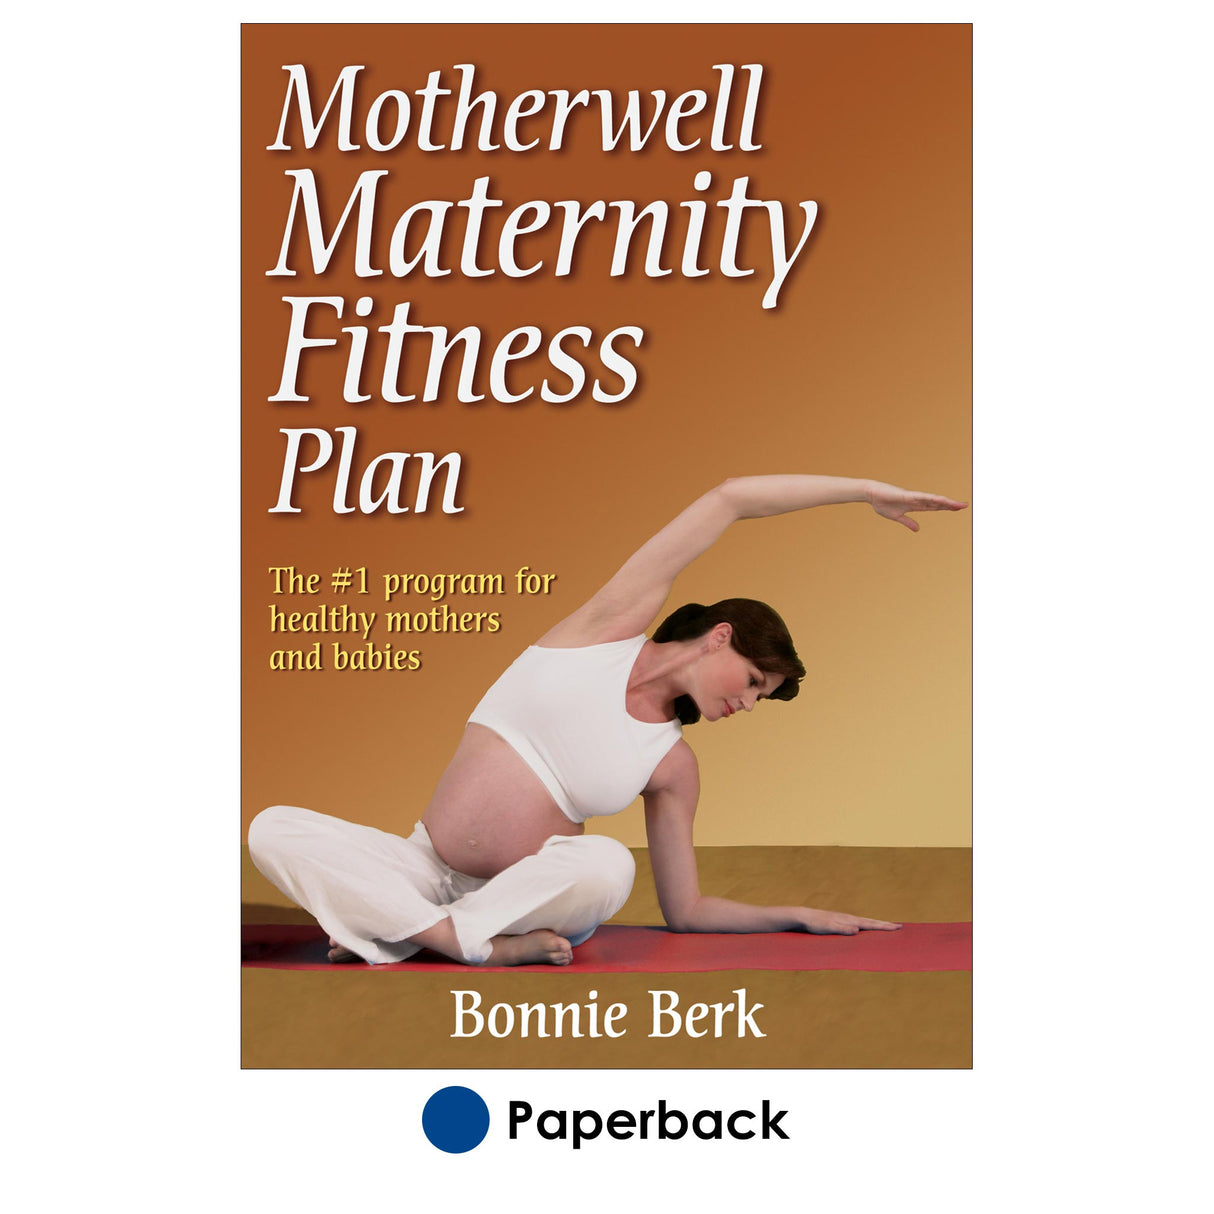 Motherwell Maternity Fitness Plan